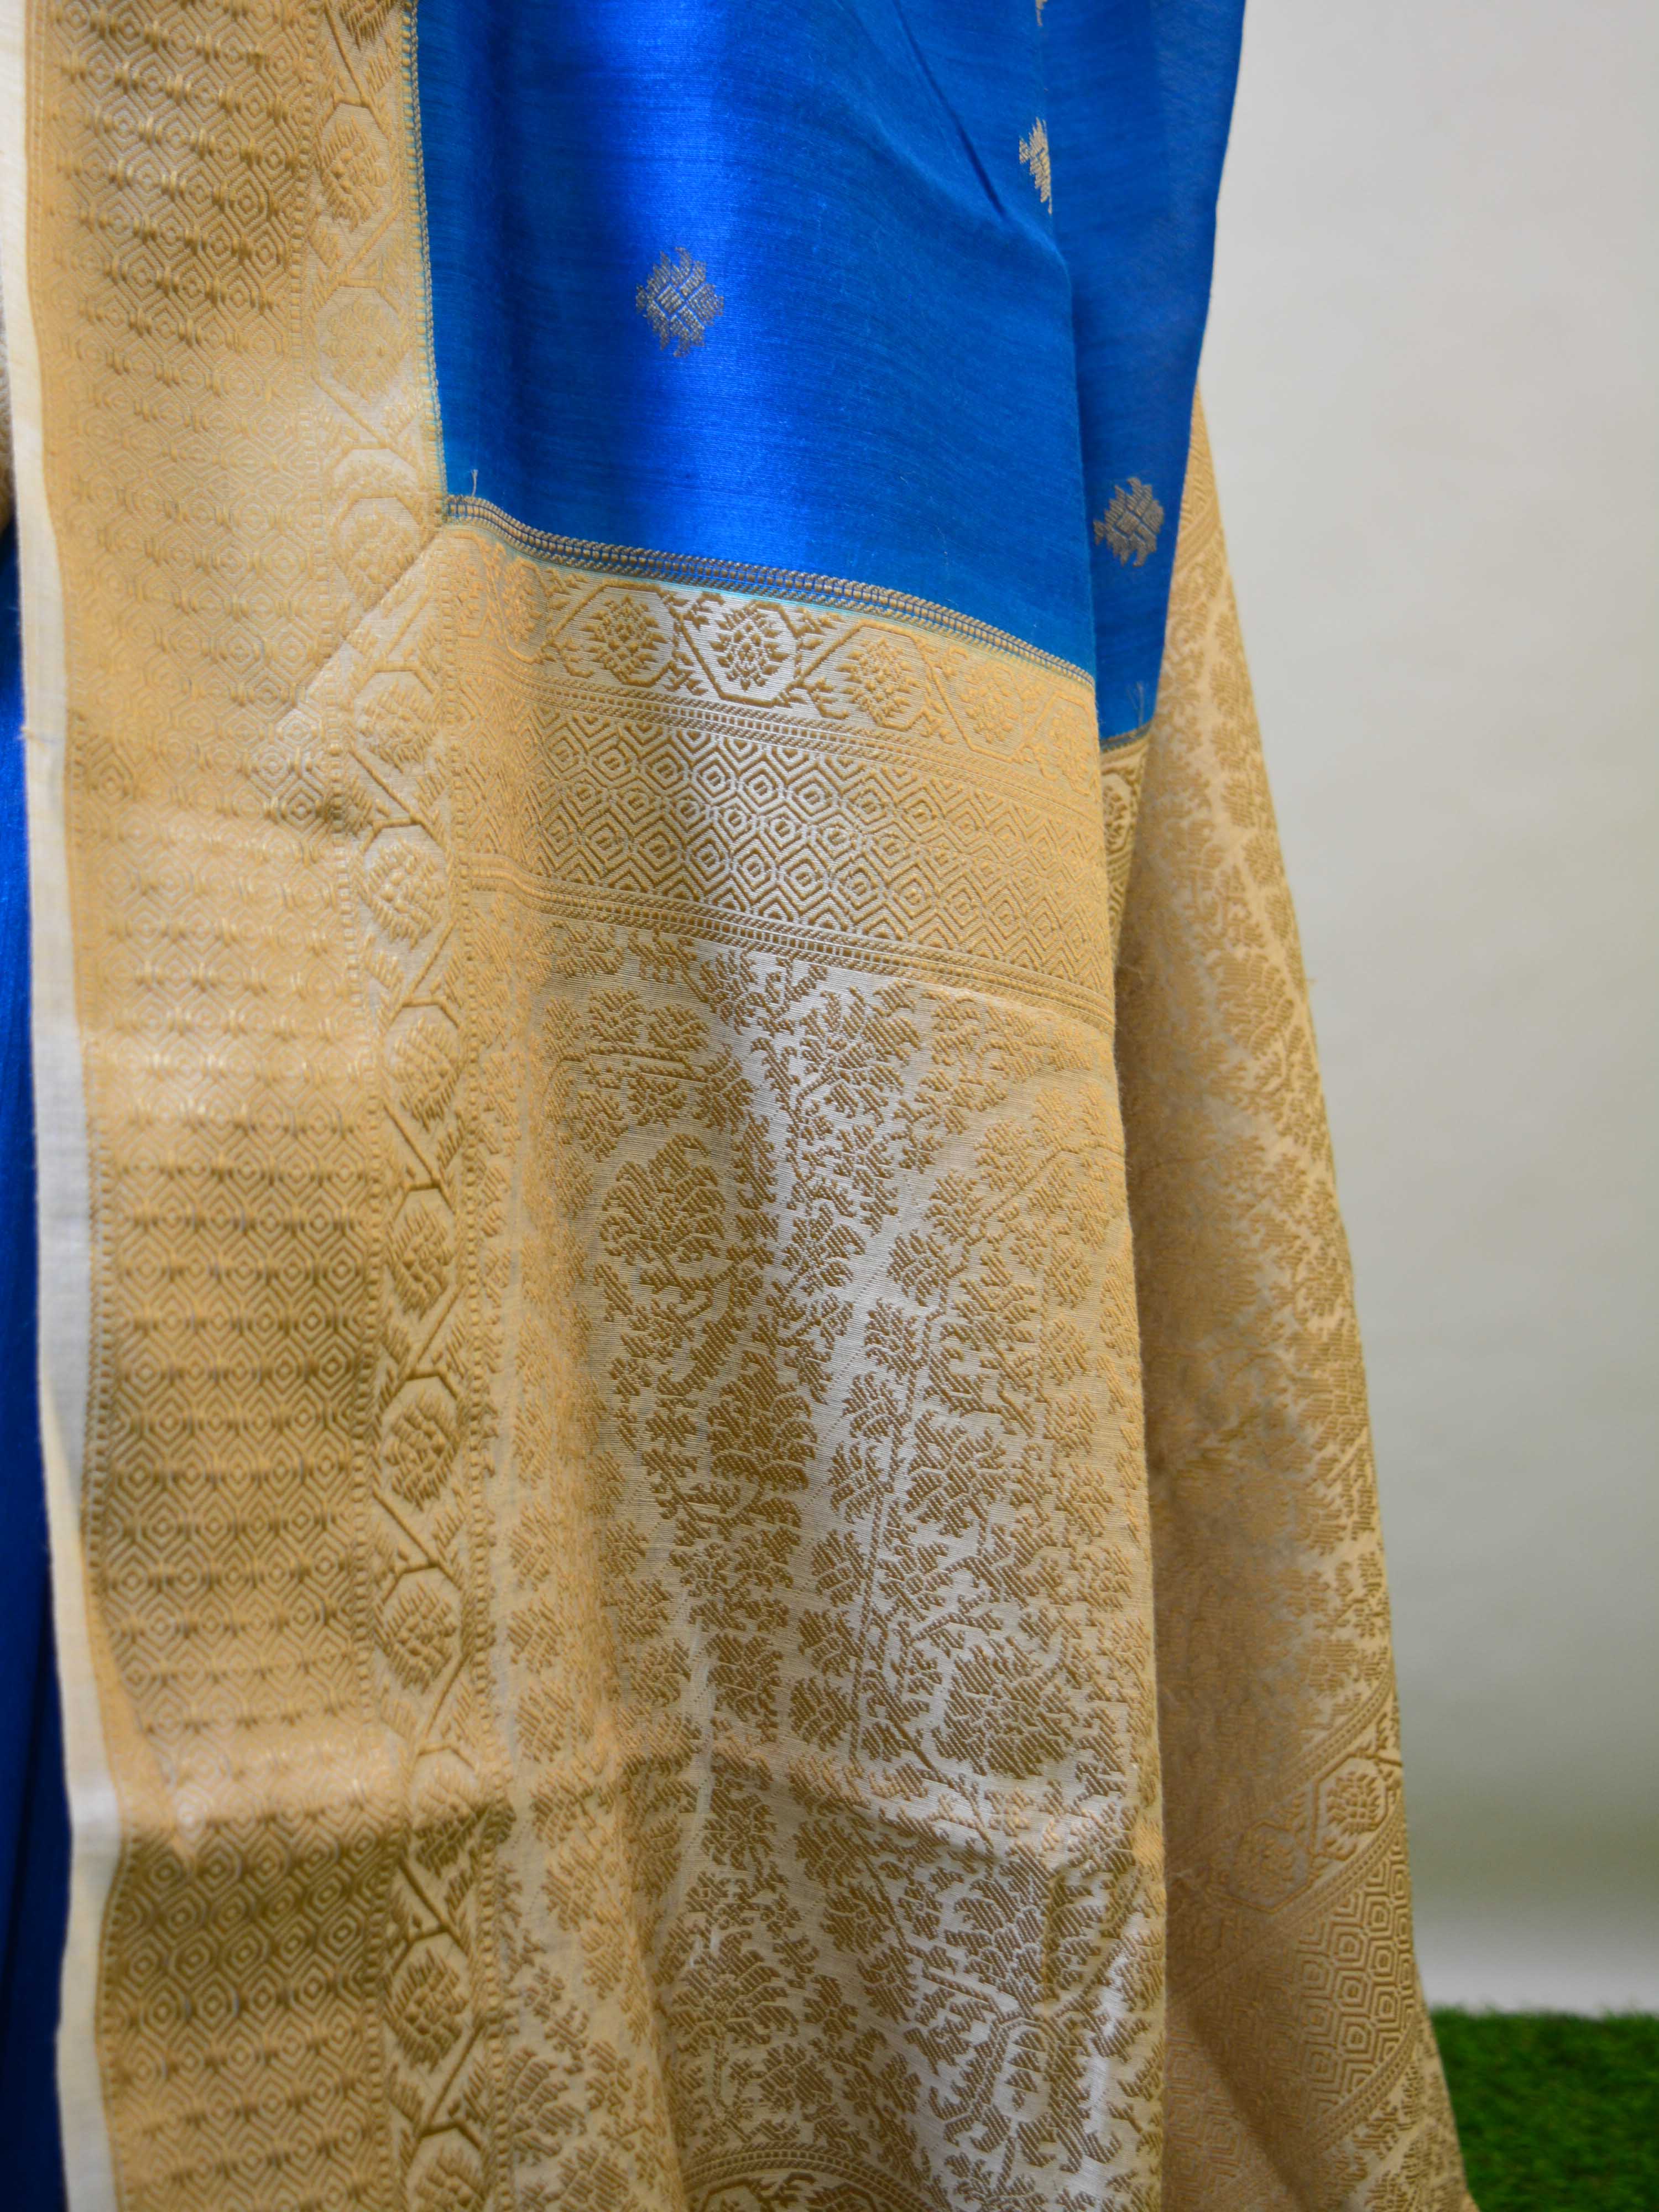 Banarasee Handwoven Pure Muga Silk Sari With Floral Border & Pallu-Blue